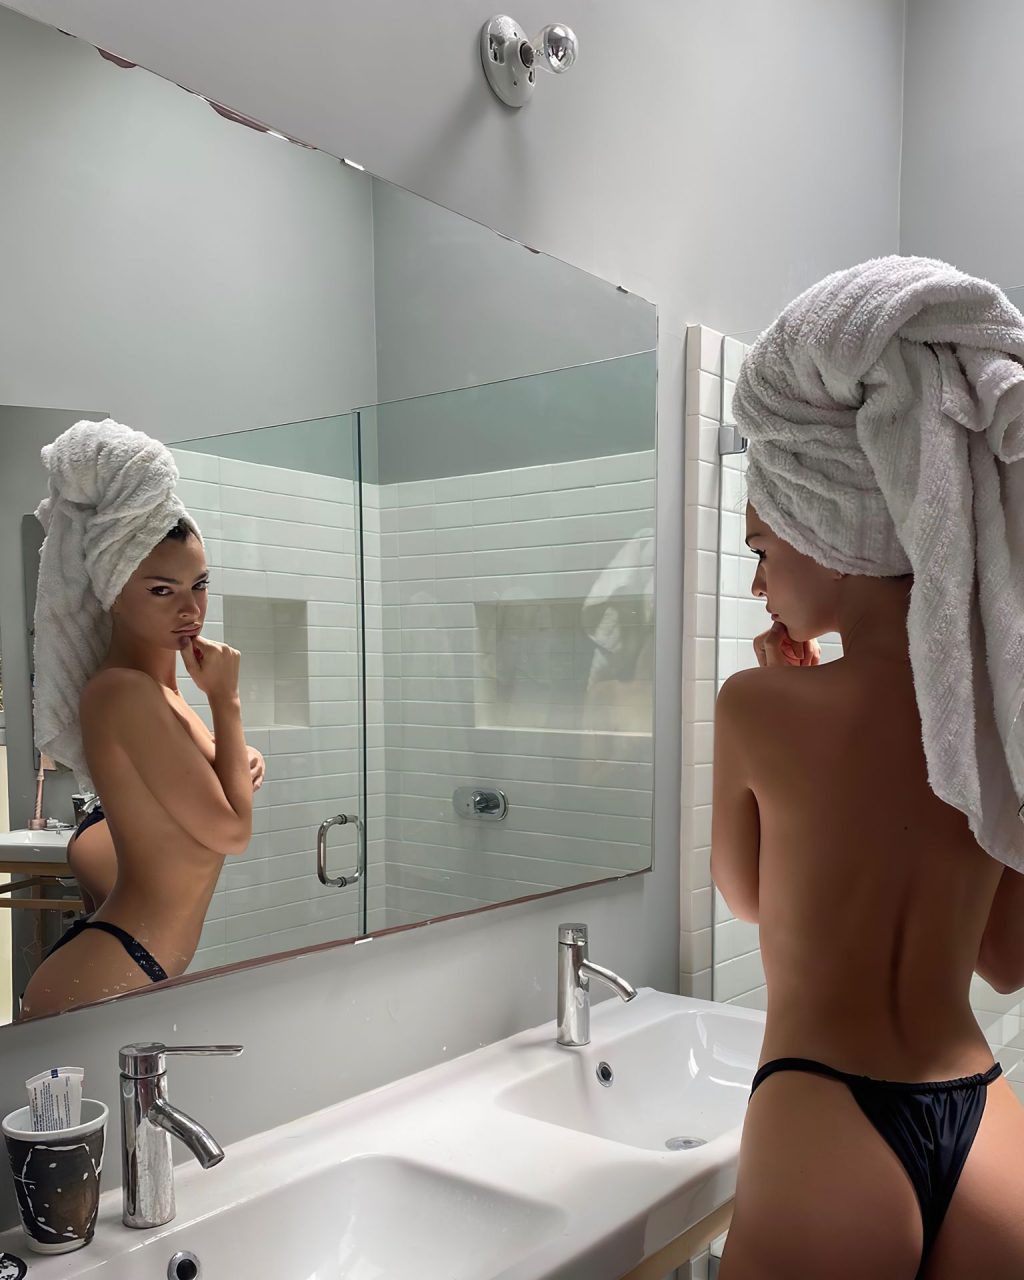 Emily O’Hara Ratajkowski Topless (2 Hot Photos)